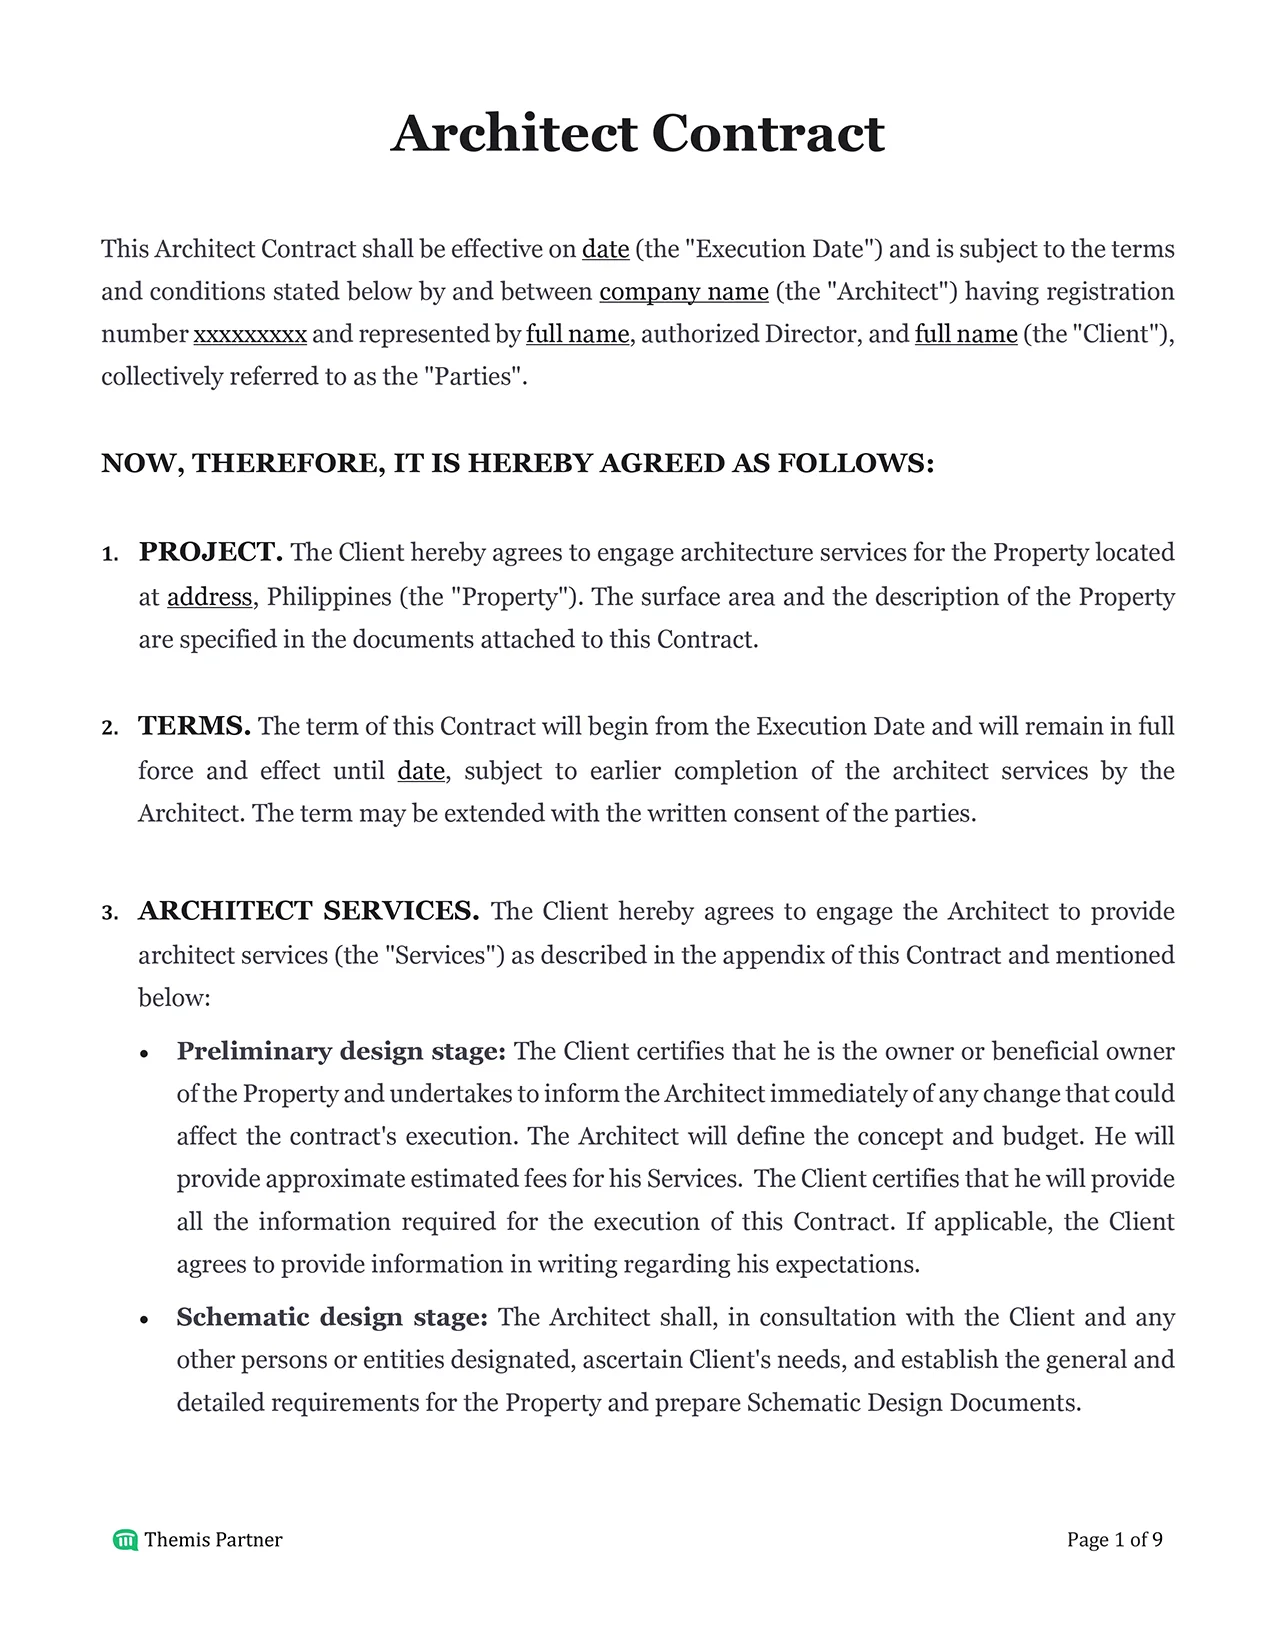 Architect contract Philippines 1